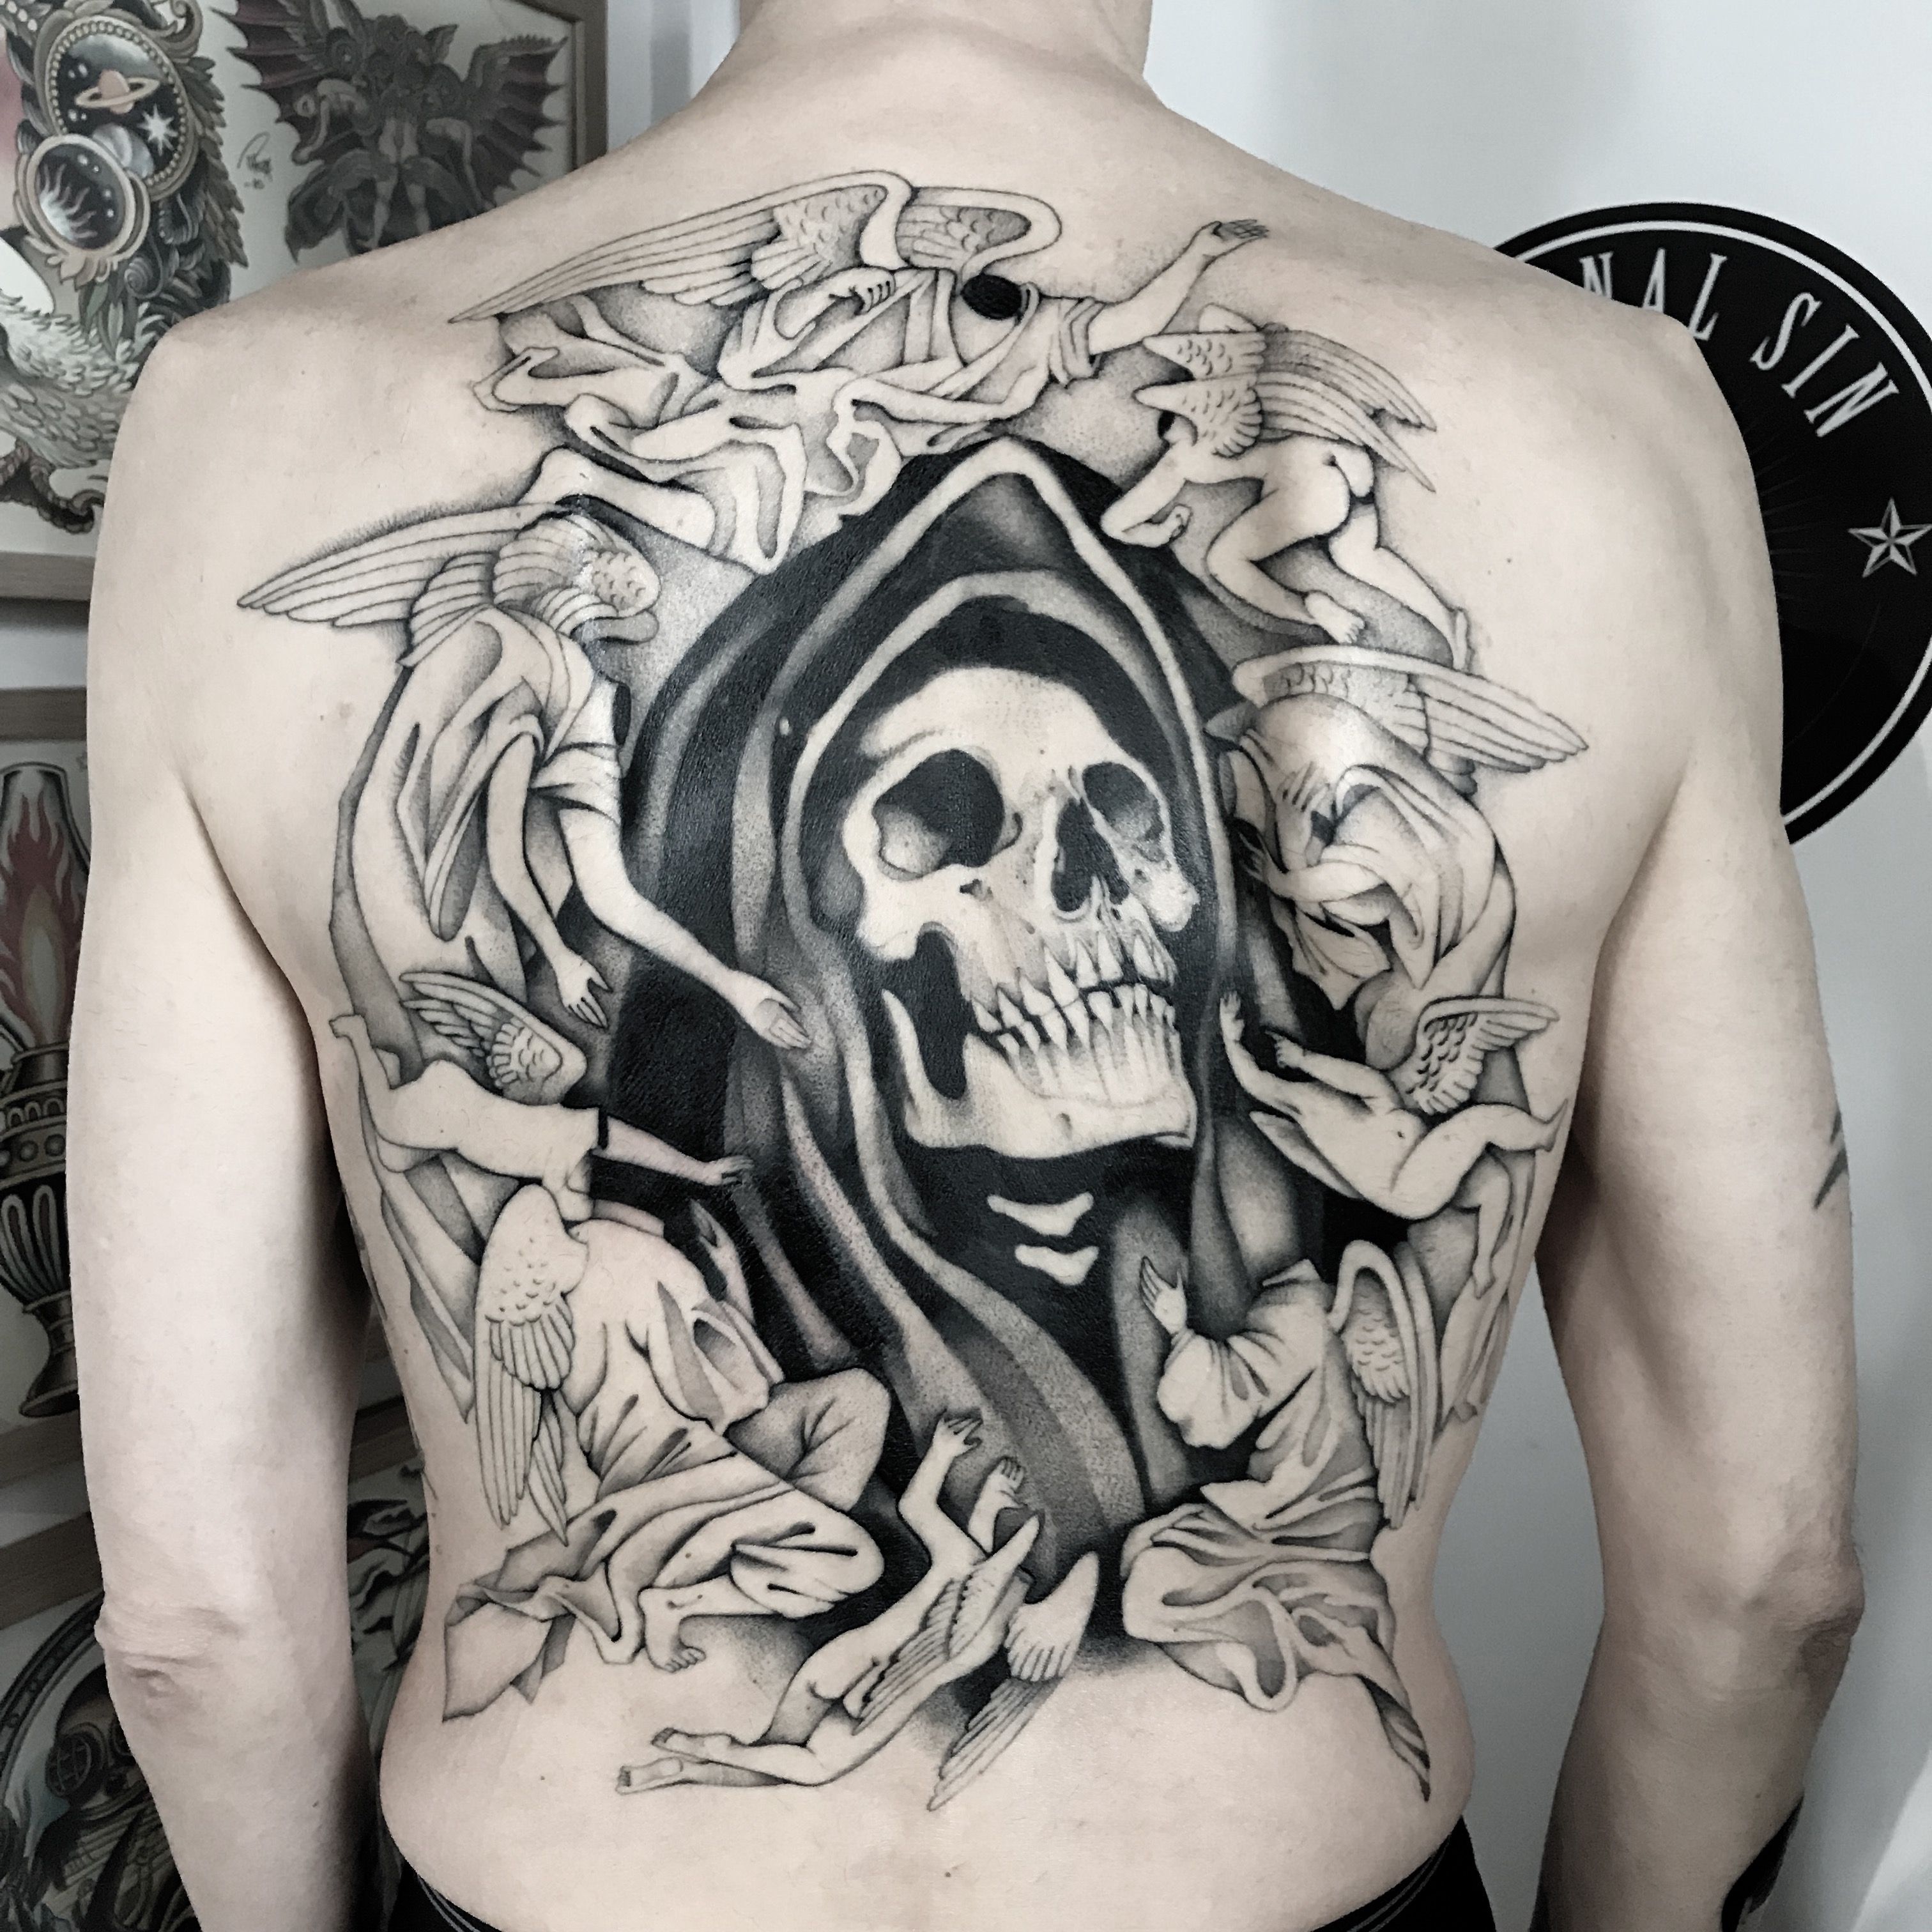 NJ Tattoo  Piercing в Twitter Brutal Angel of Death tattoo by Jose  Bolorin  12ozstudios team12oz tattoo tattoos angelofdeath  httpstcoDrsCBaoayM  Twitter